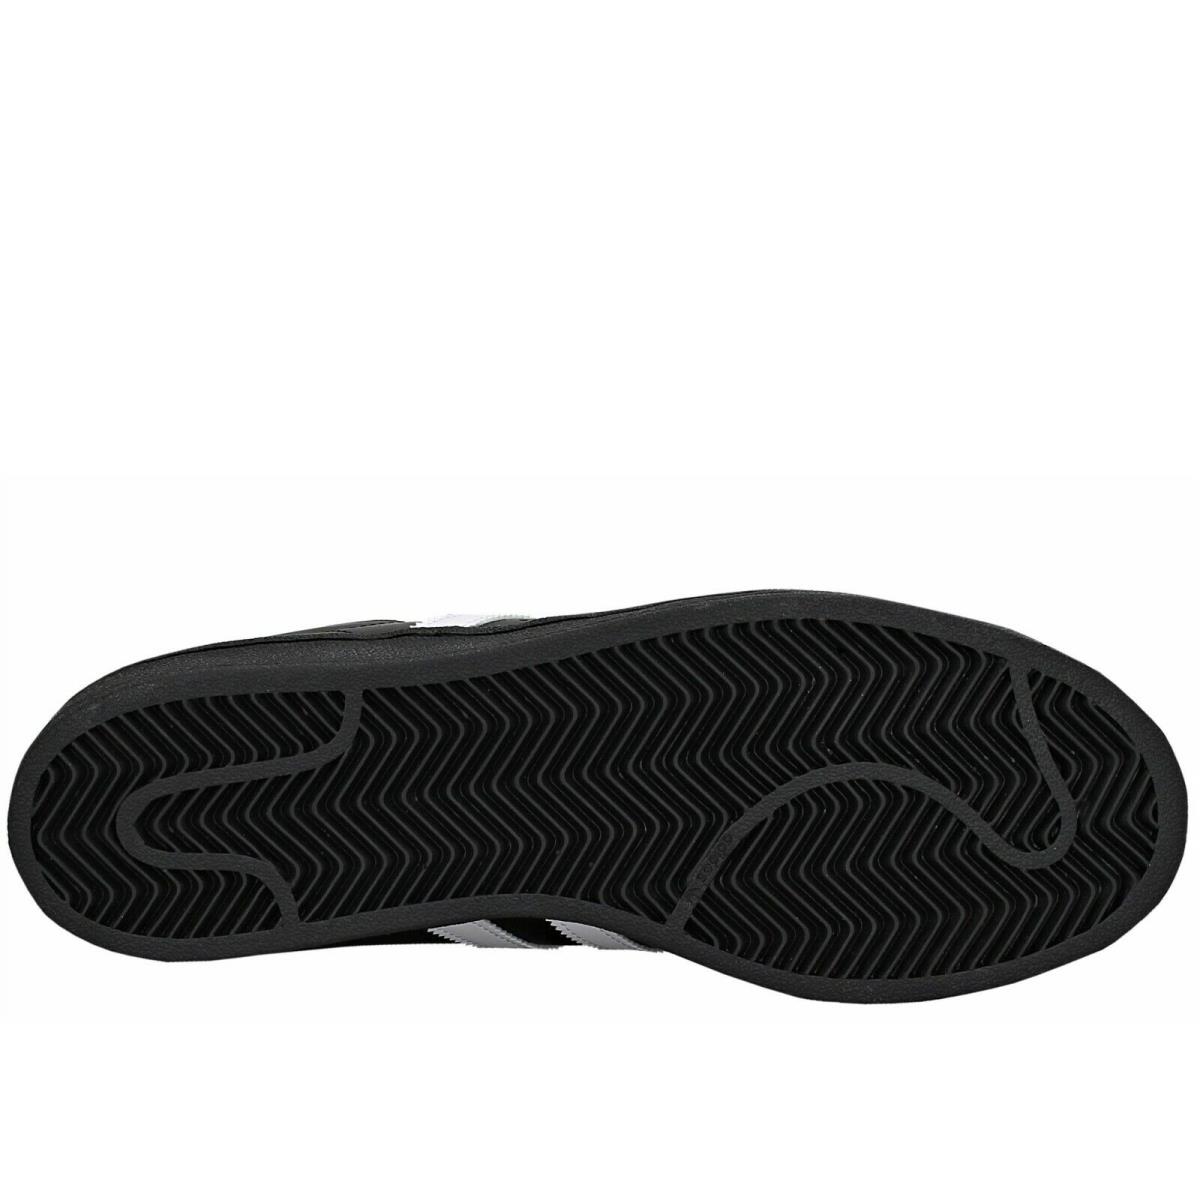 Adidas shoes Superstar Foundation - Black 6